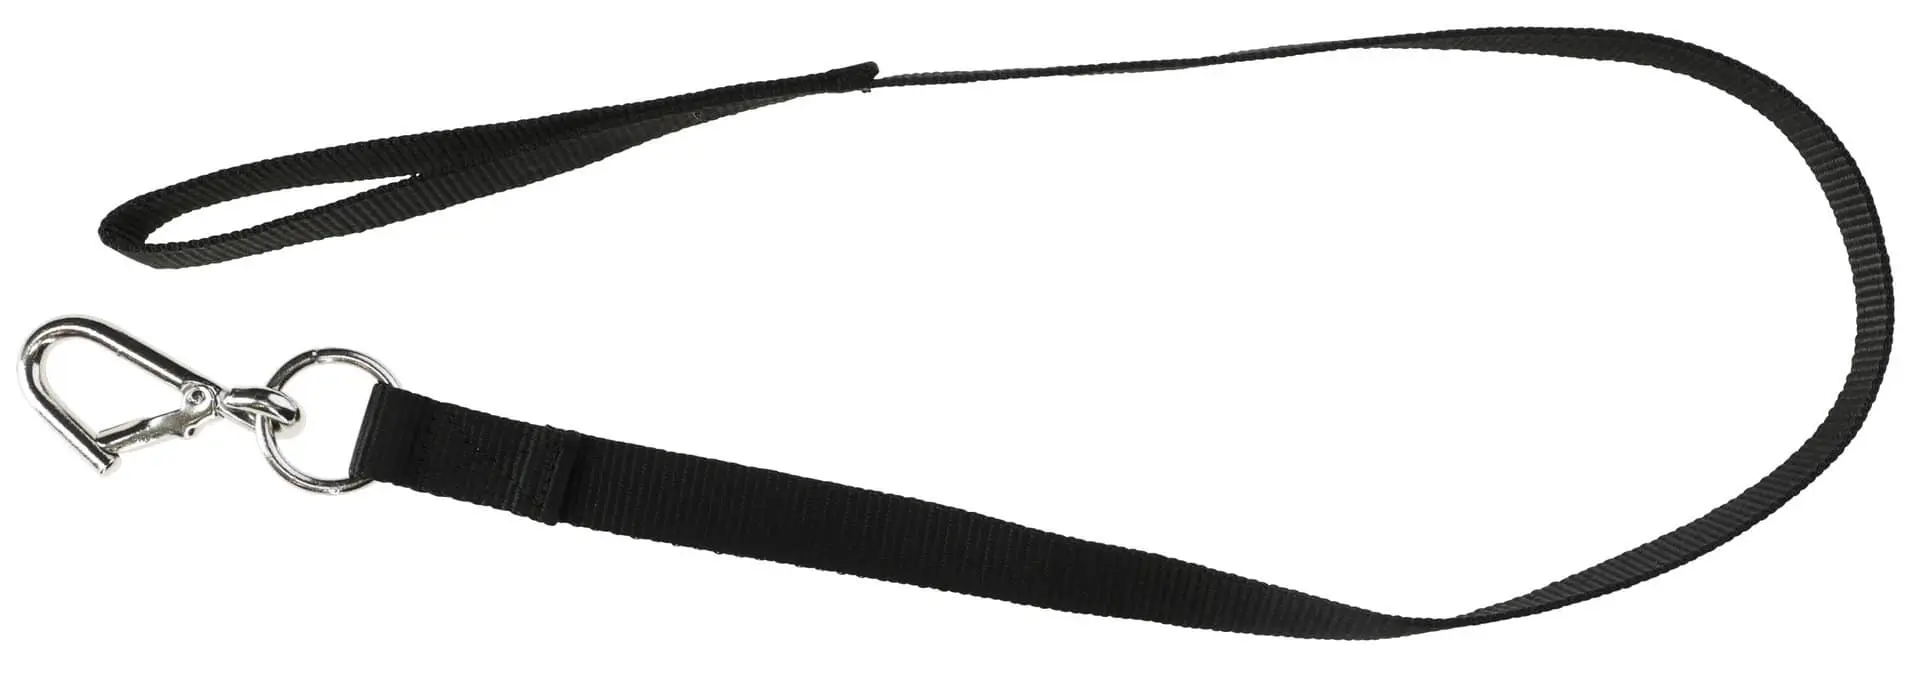 Multifunctional belt black 100 cm